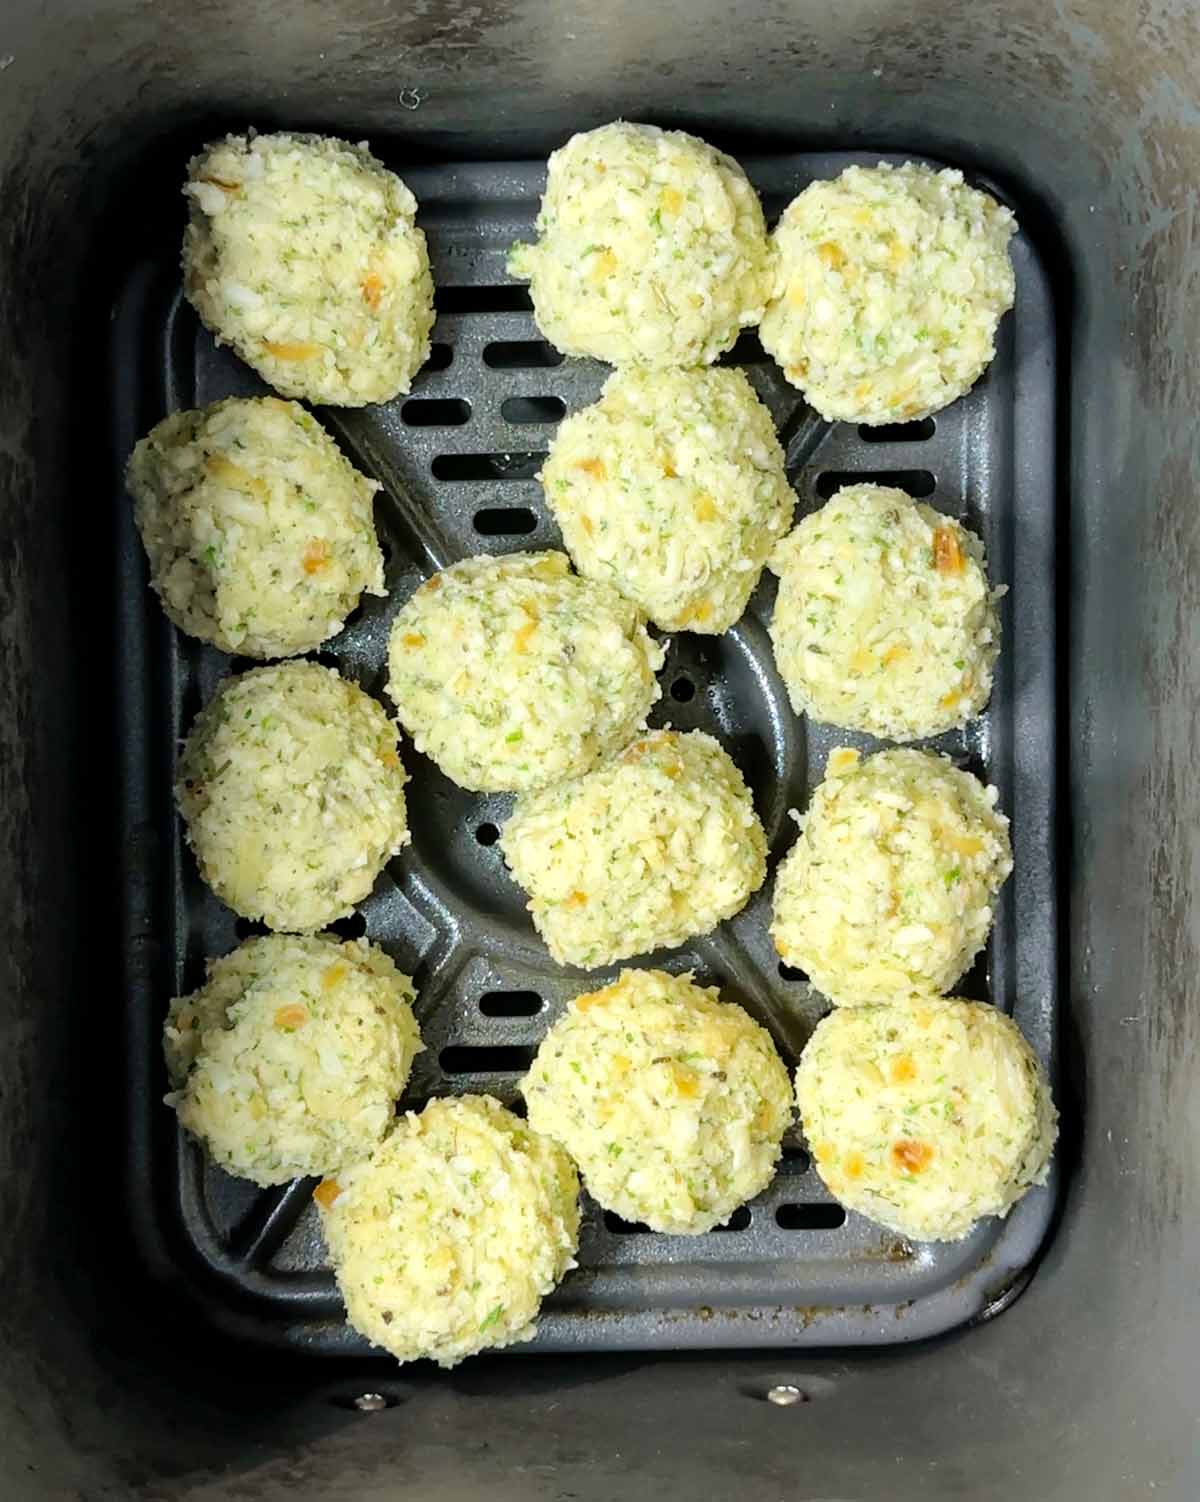 Stuffing balls in an air fryer basket.